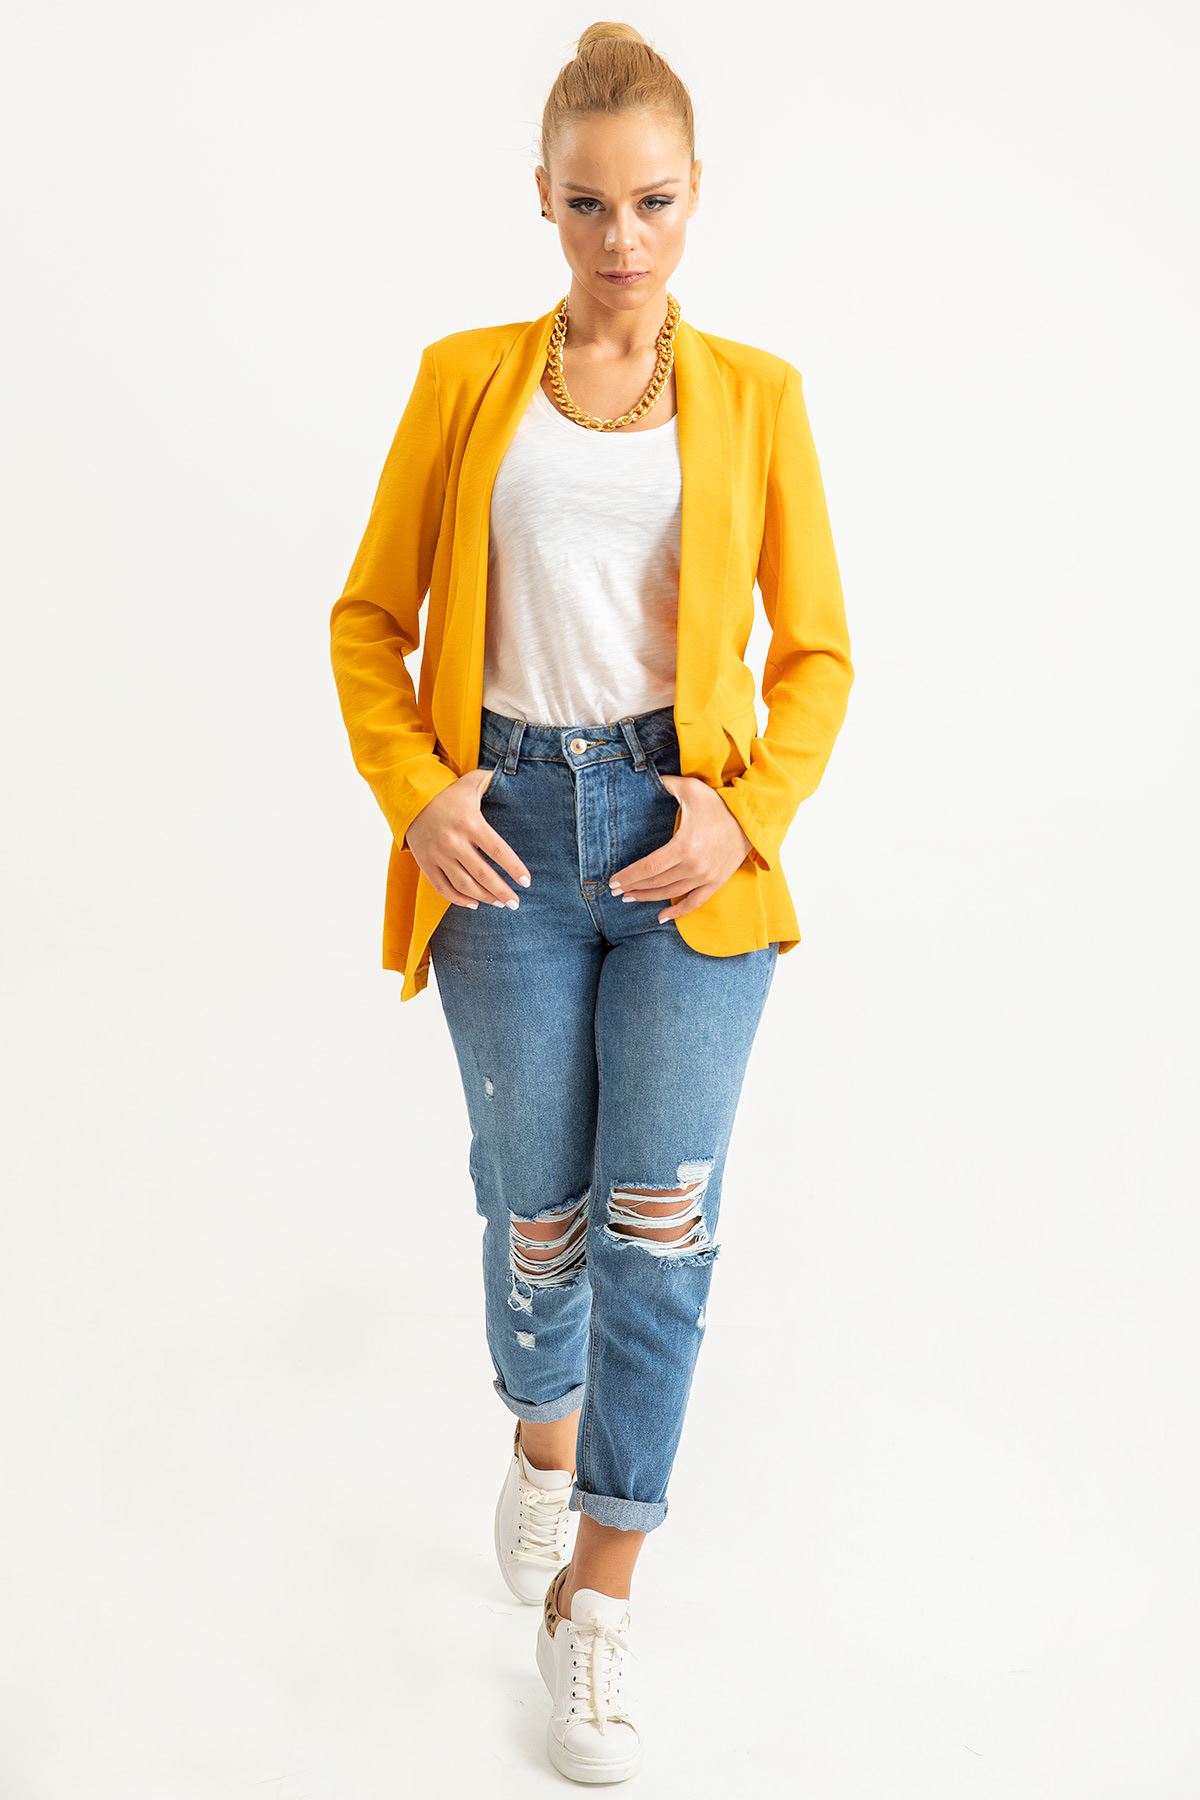 Aerobin Fabric Wing Collar Below Hip Comfy Blazer Women Jacket - Mustard